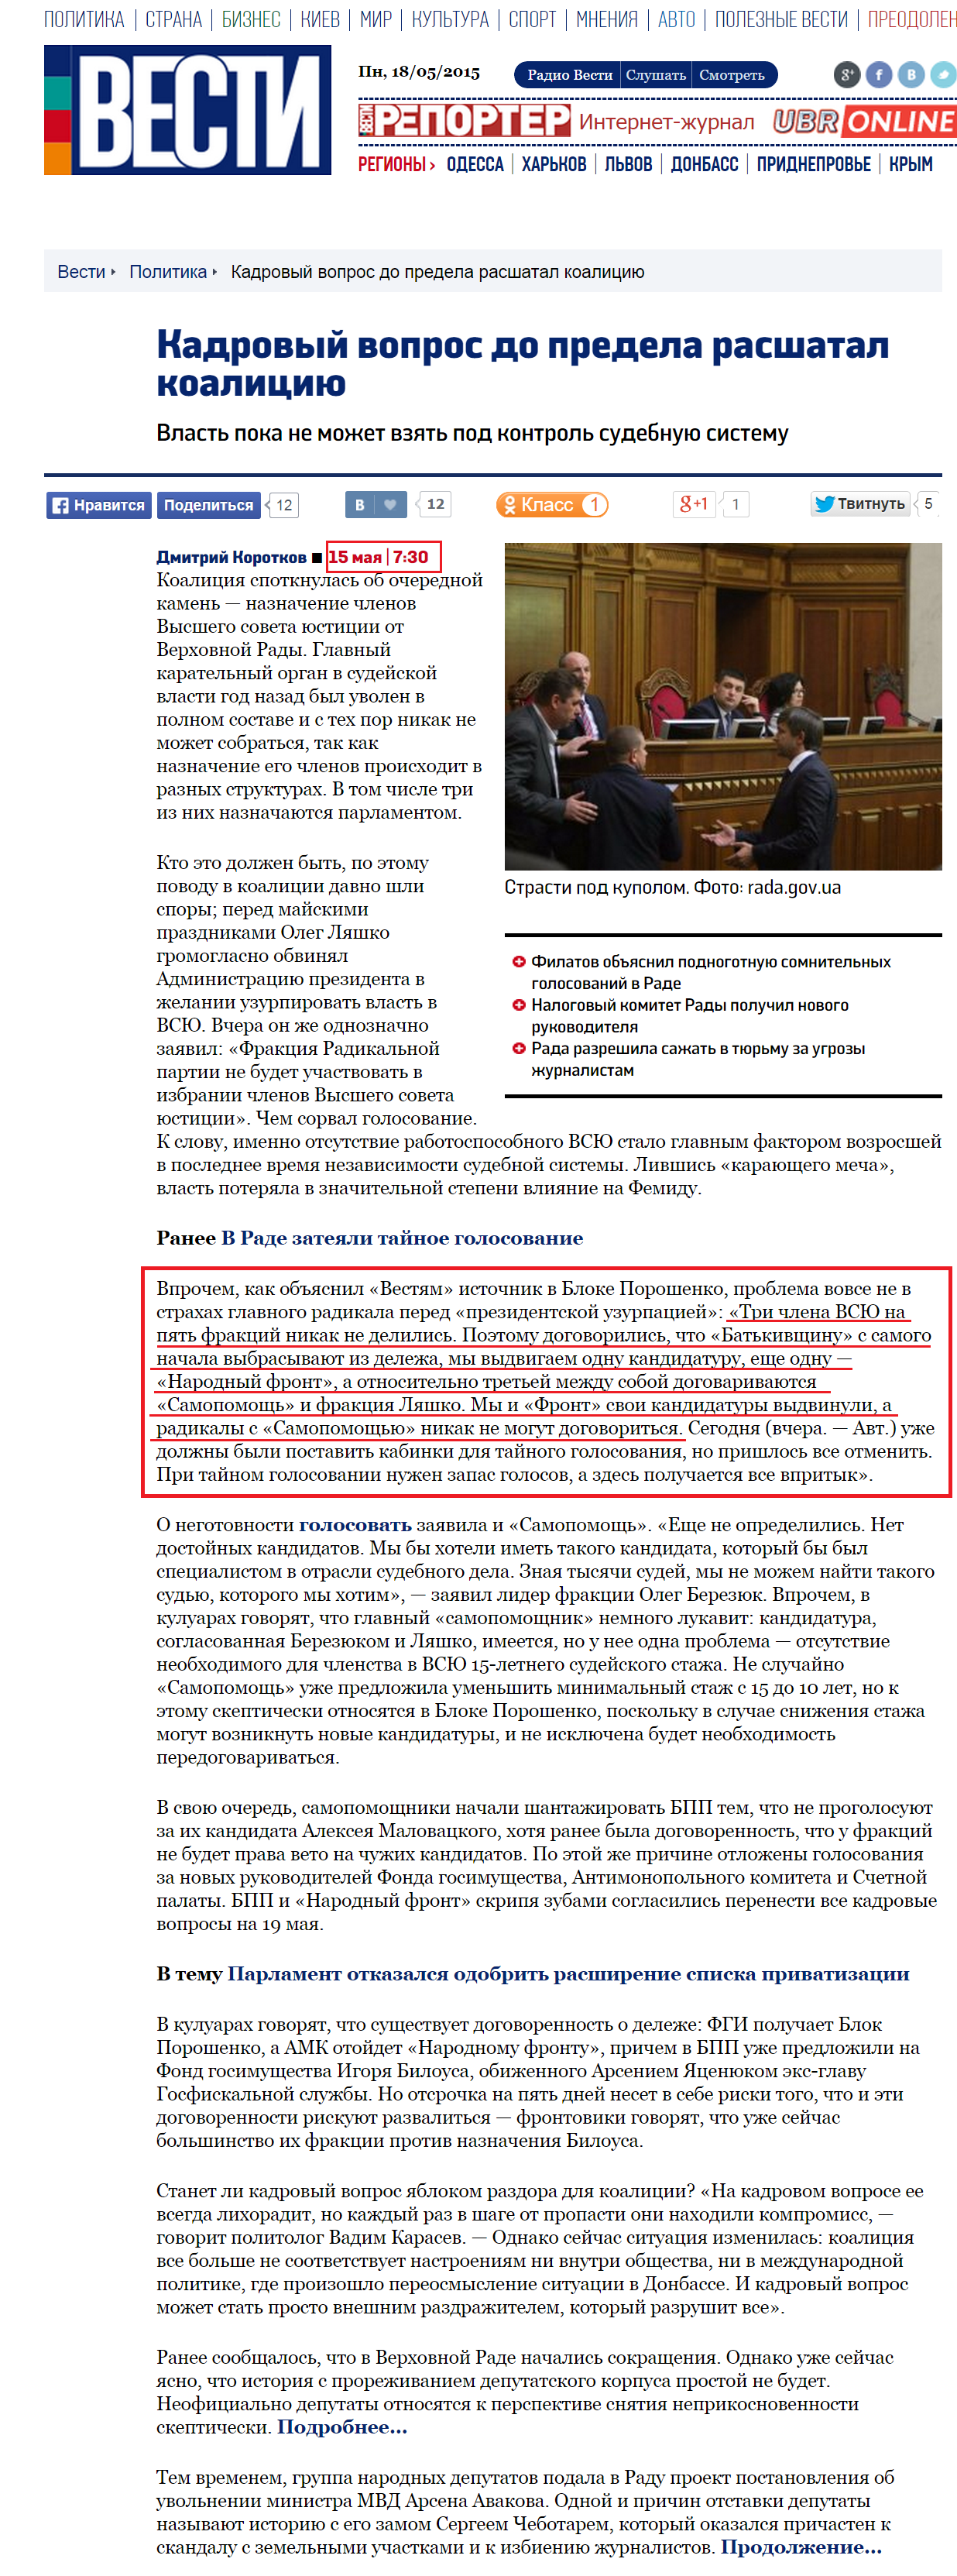 http://vesti-ukr.com/politika/99797-kadrovyj-vopros-do-predela-rasshatal-koaliciju